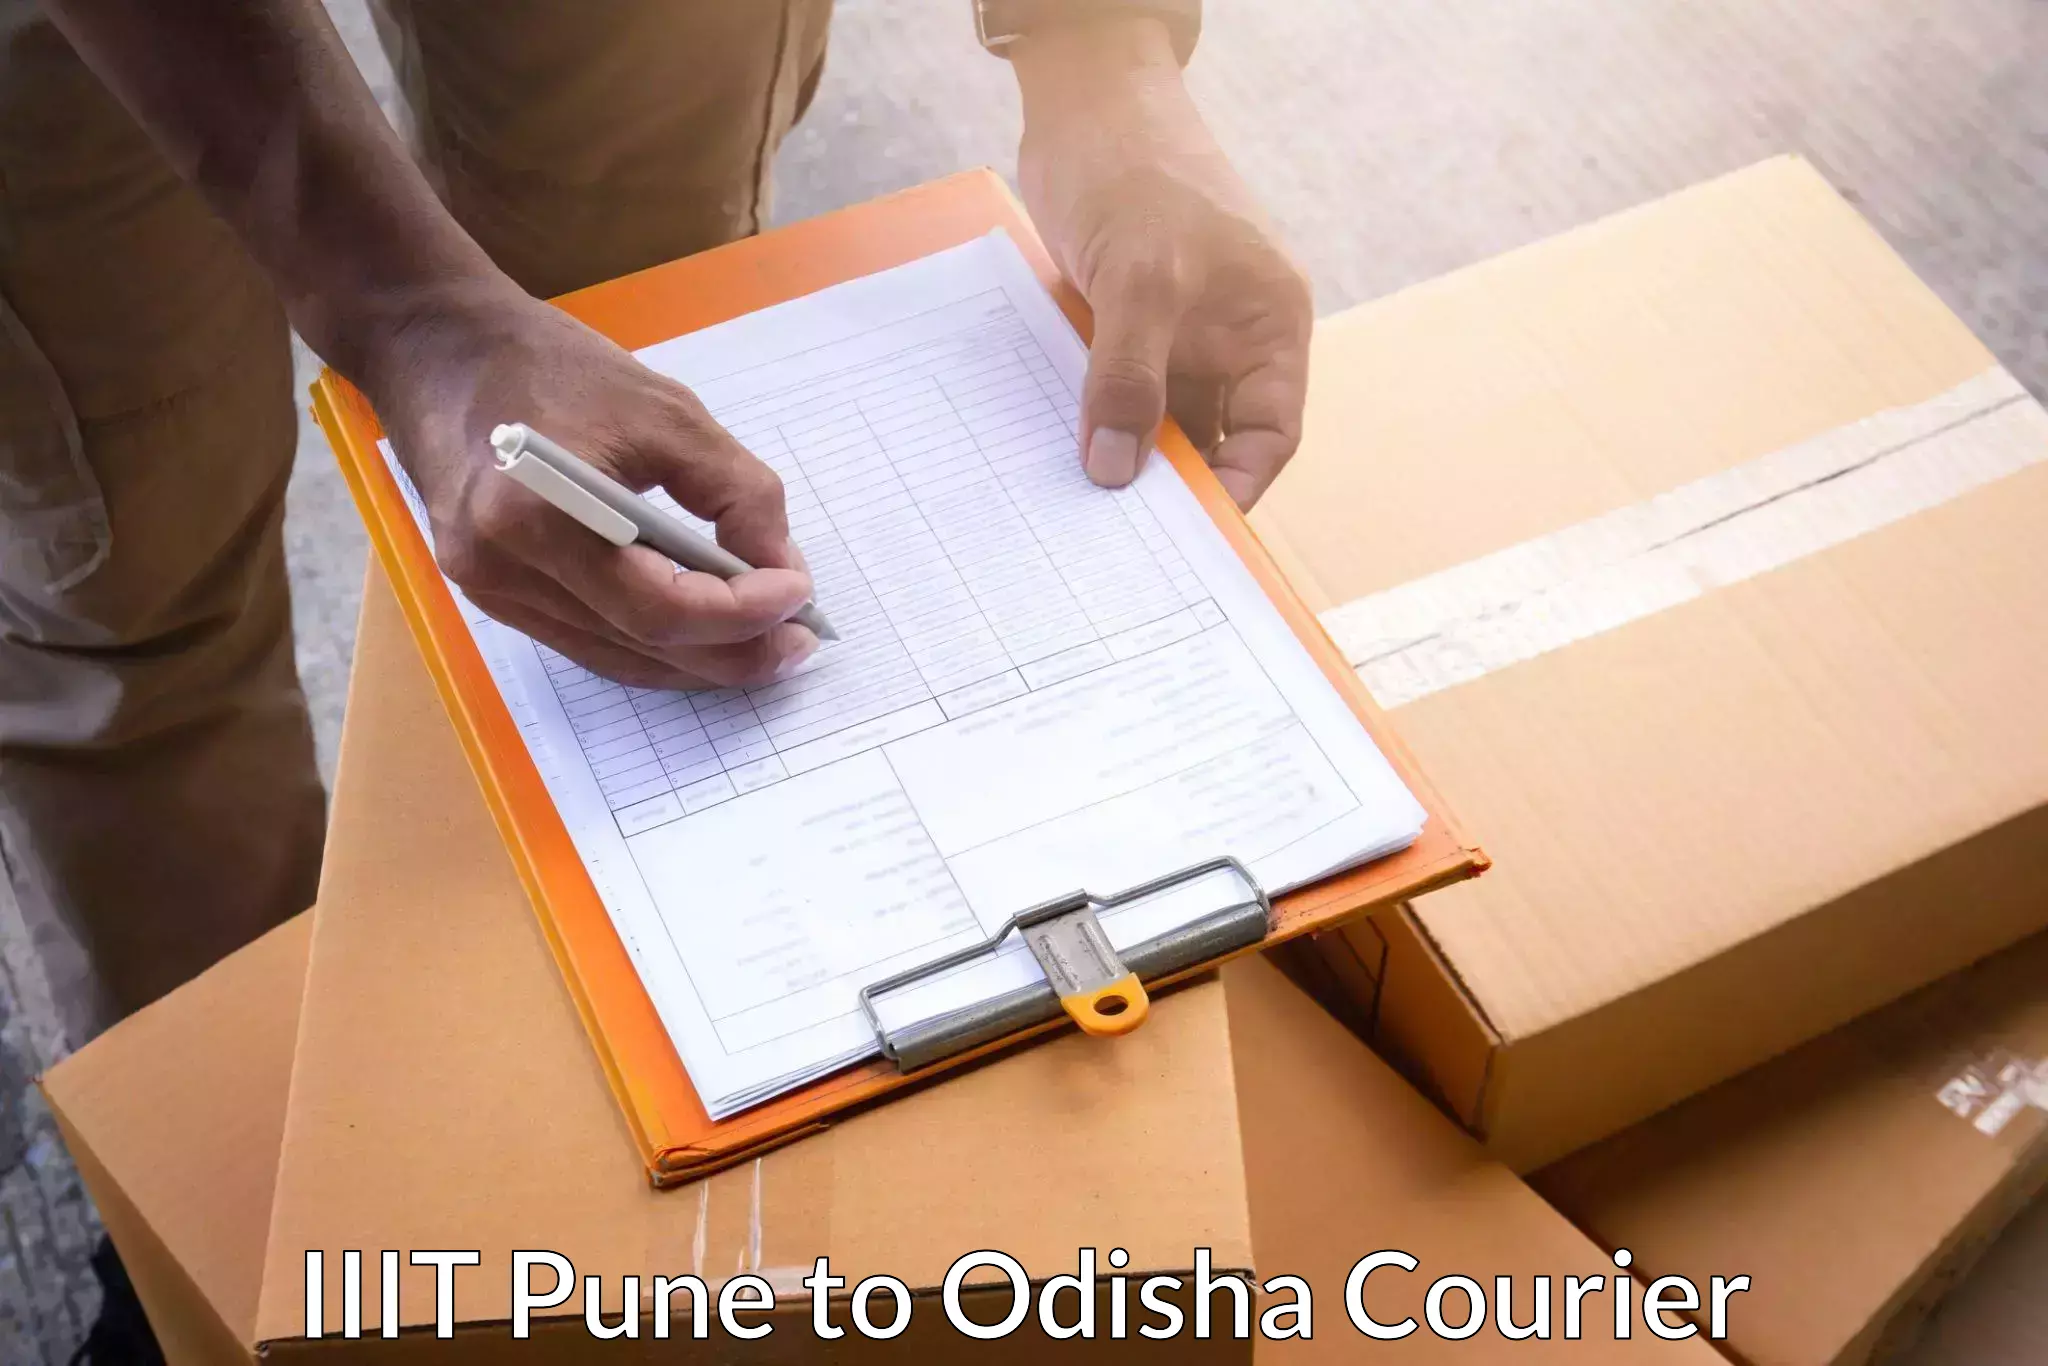 Courier app IIIT Pune to Jaraka